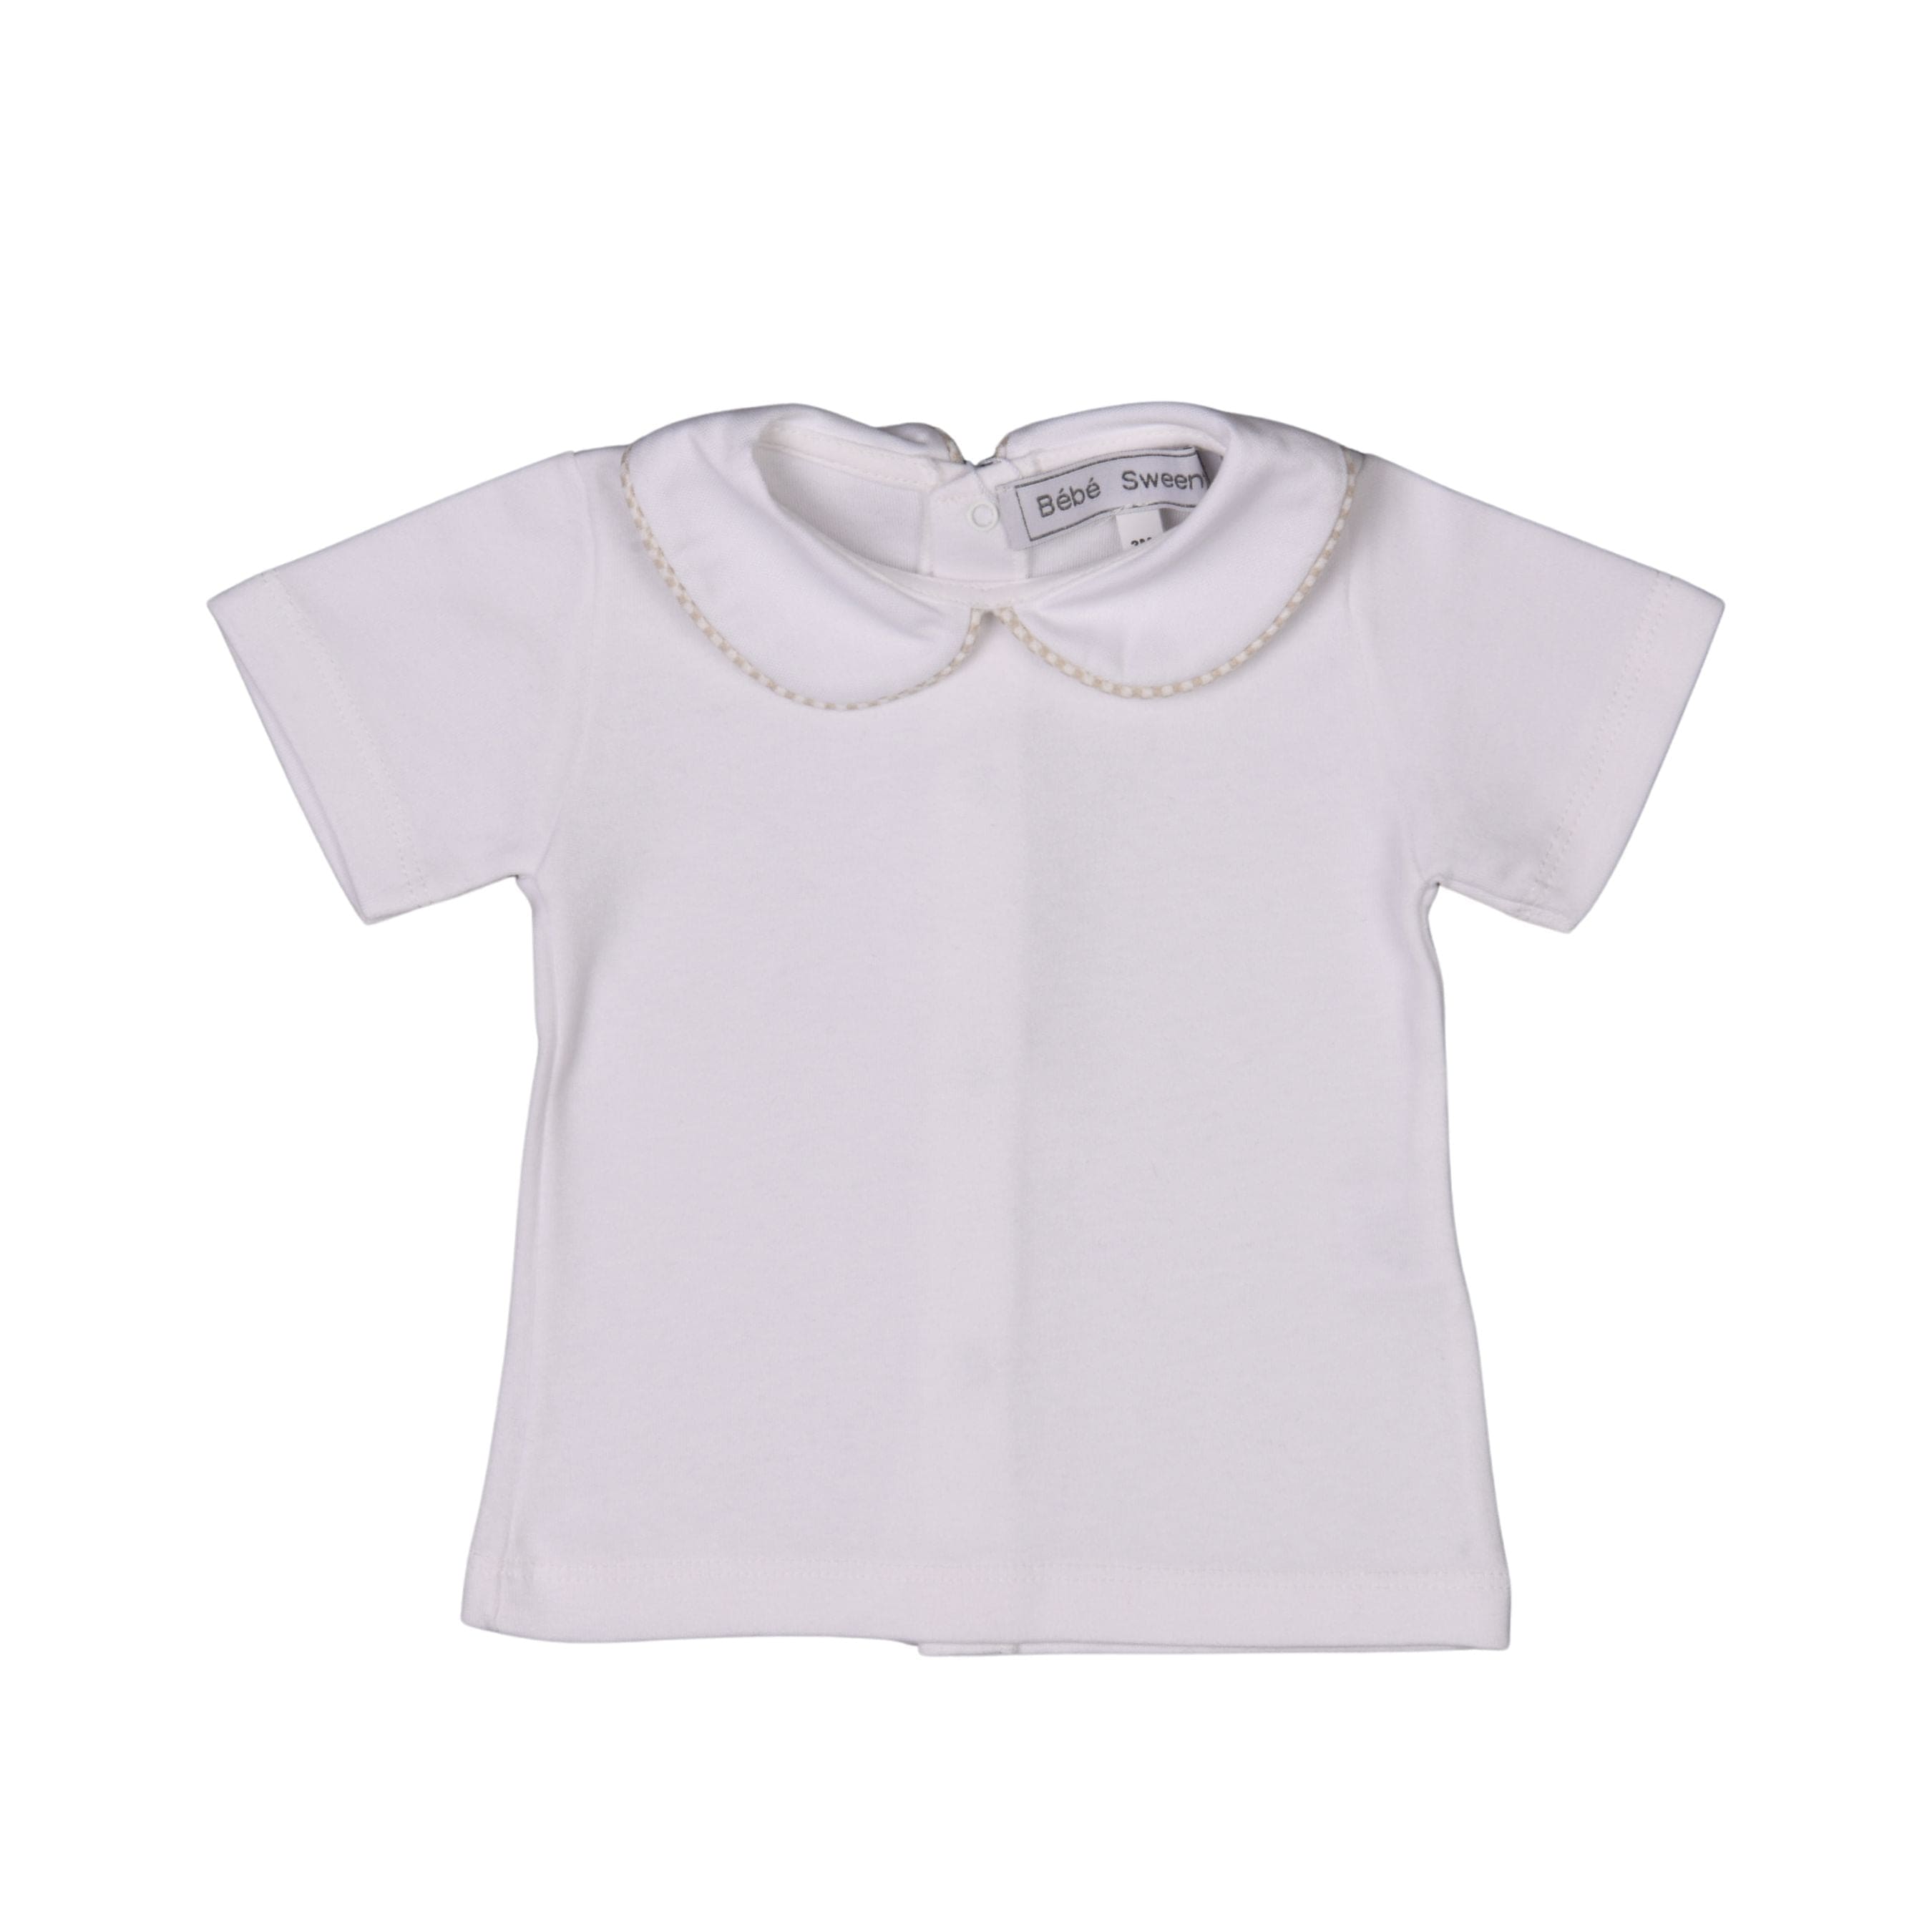 Lucas | Boys White & Beige Cotton Gingham T-shirt